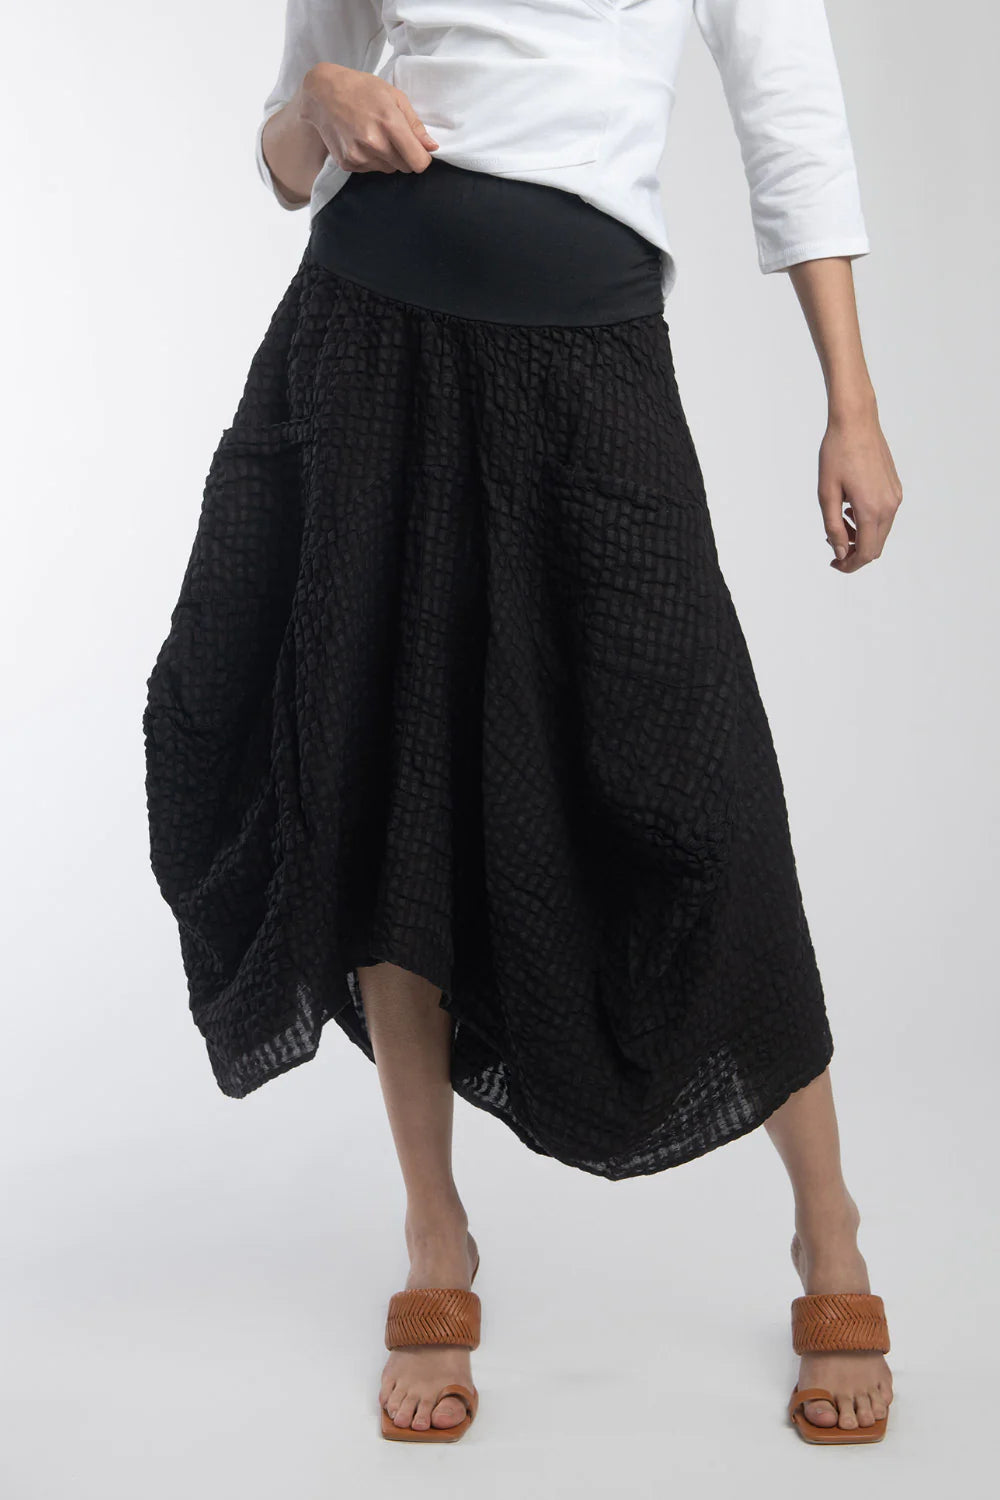 Luna Luz Seersucker/2 Pocket Skirt Black